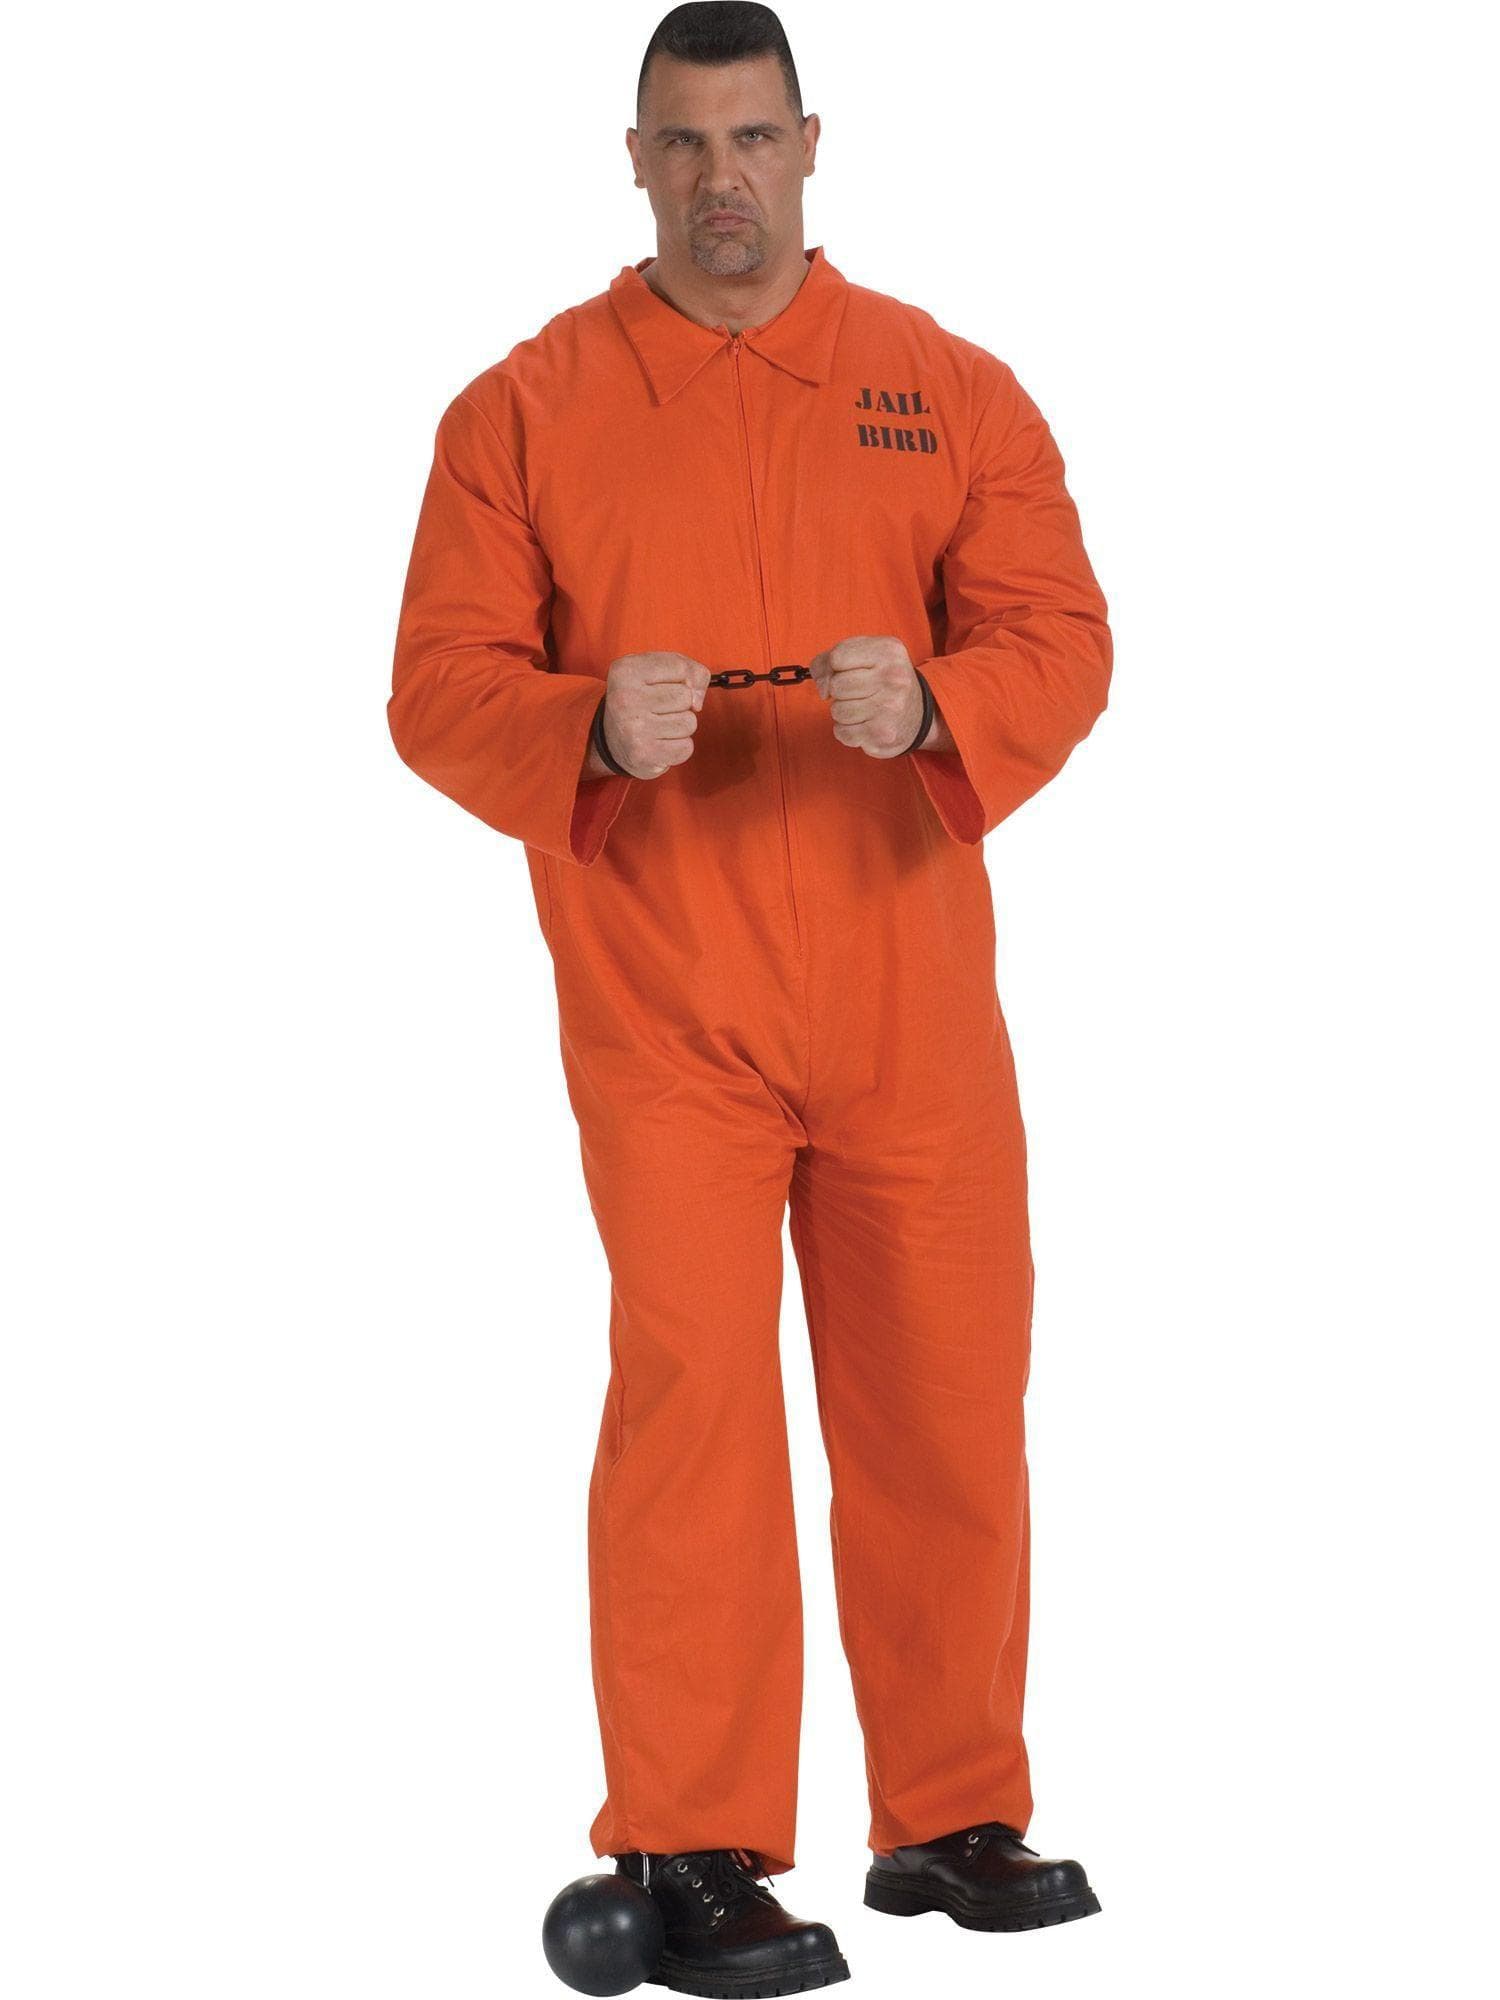 Adult Jail Bird Costume - costumes.com